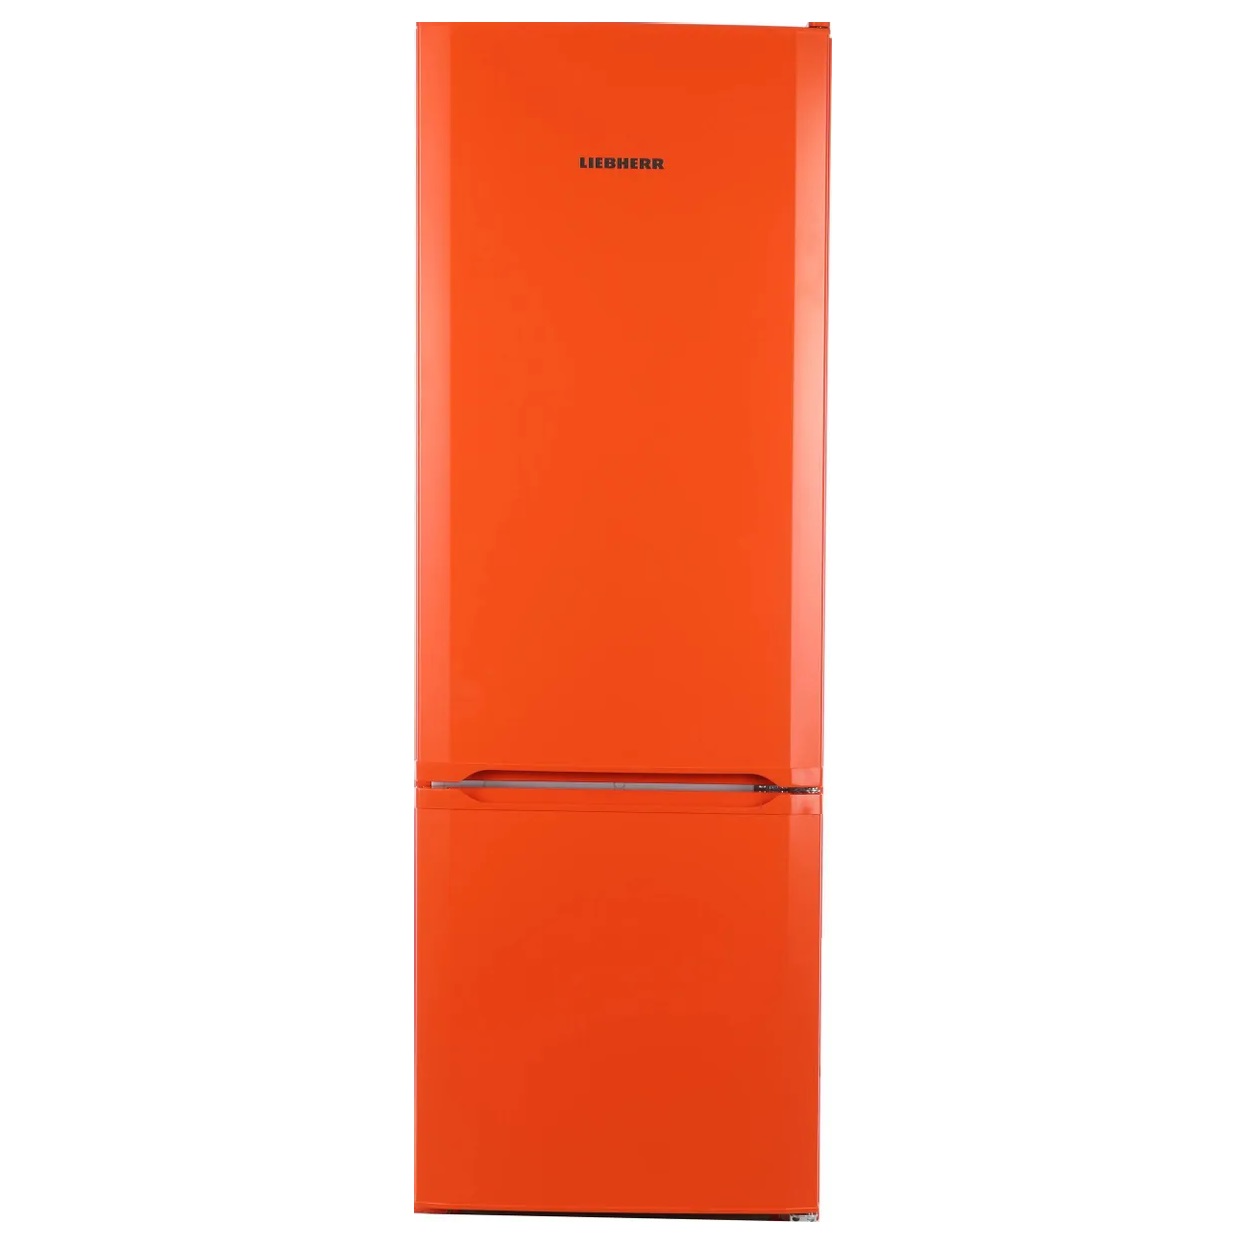 Холодильник LIEBHERR CUNO 2831-22 001 оранжевый холодильник liebherr cuno 2831 22 001 оранжевый